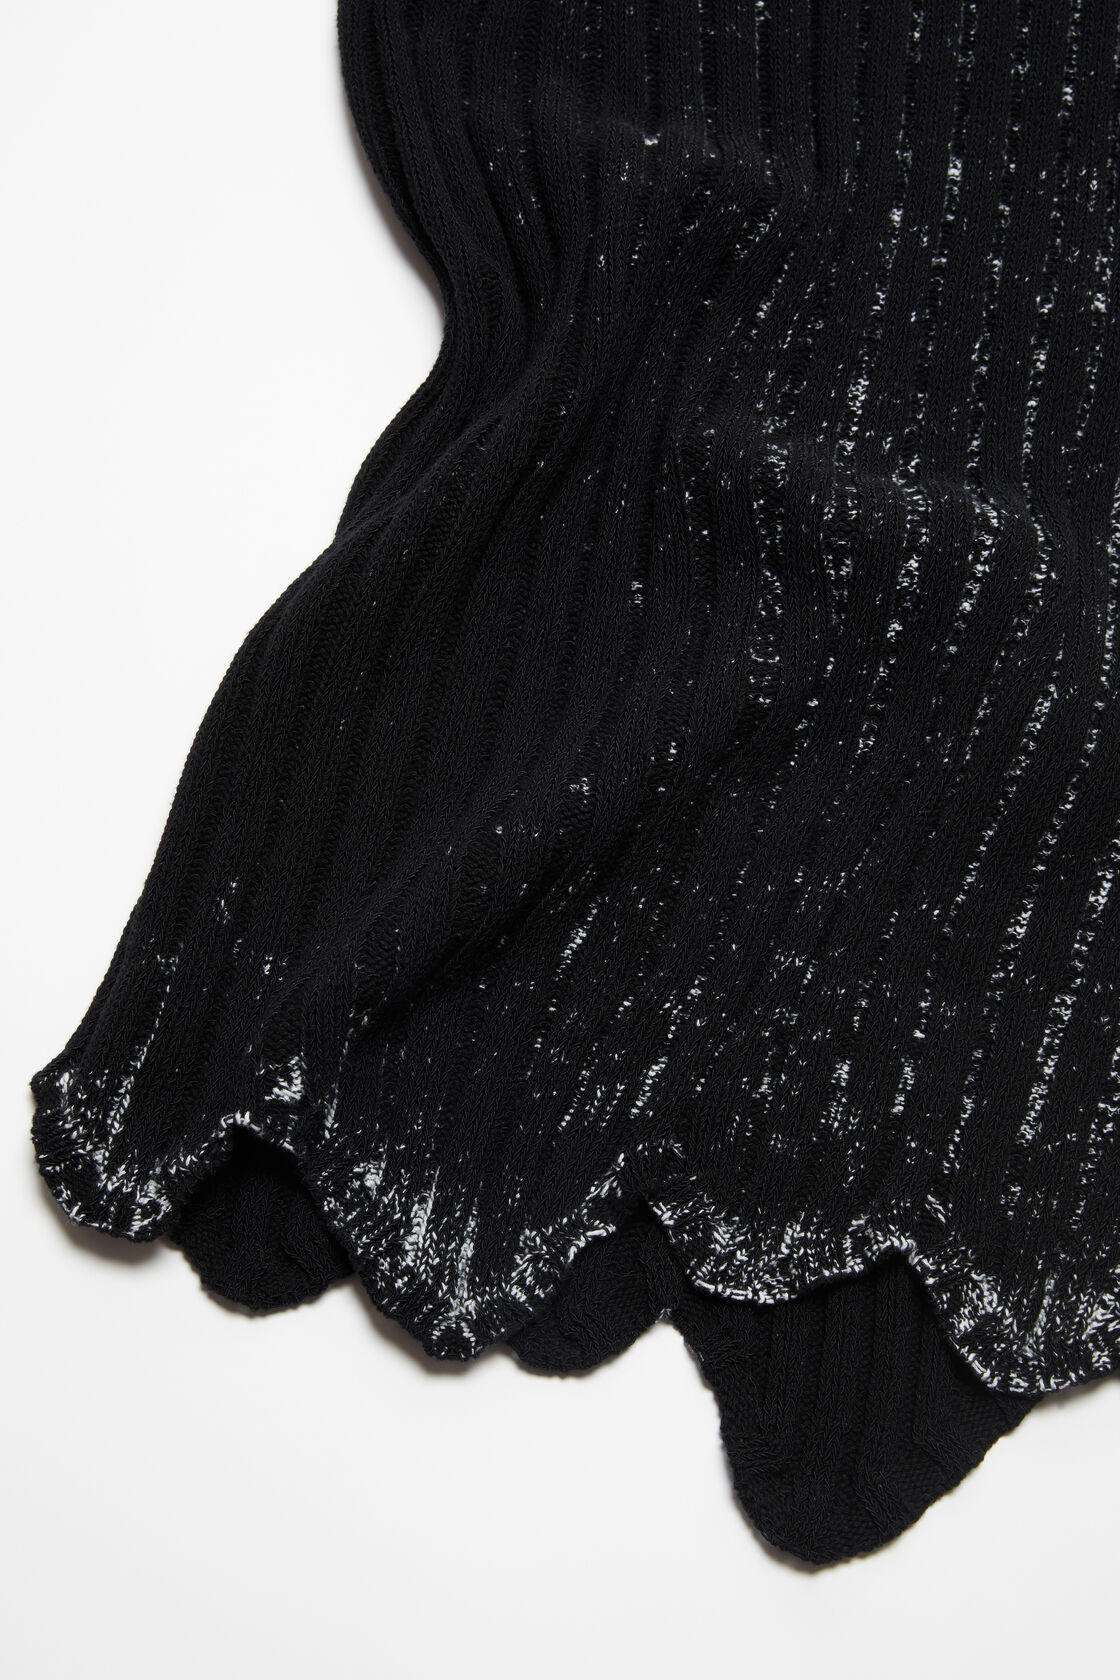 ACNE STUDIOS Knit Skirt in Black/White S